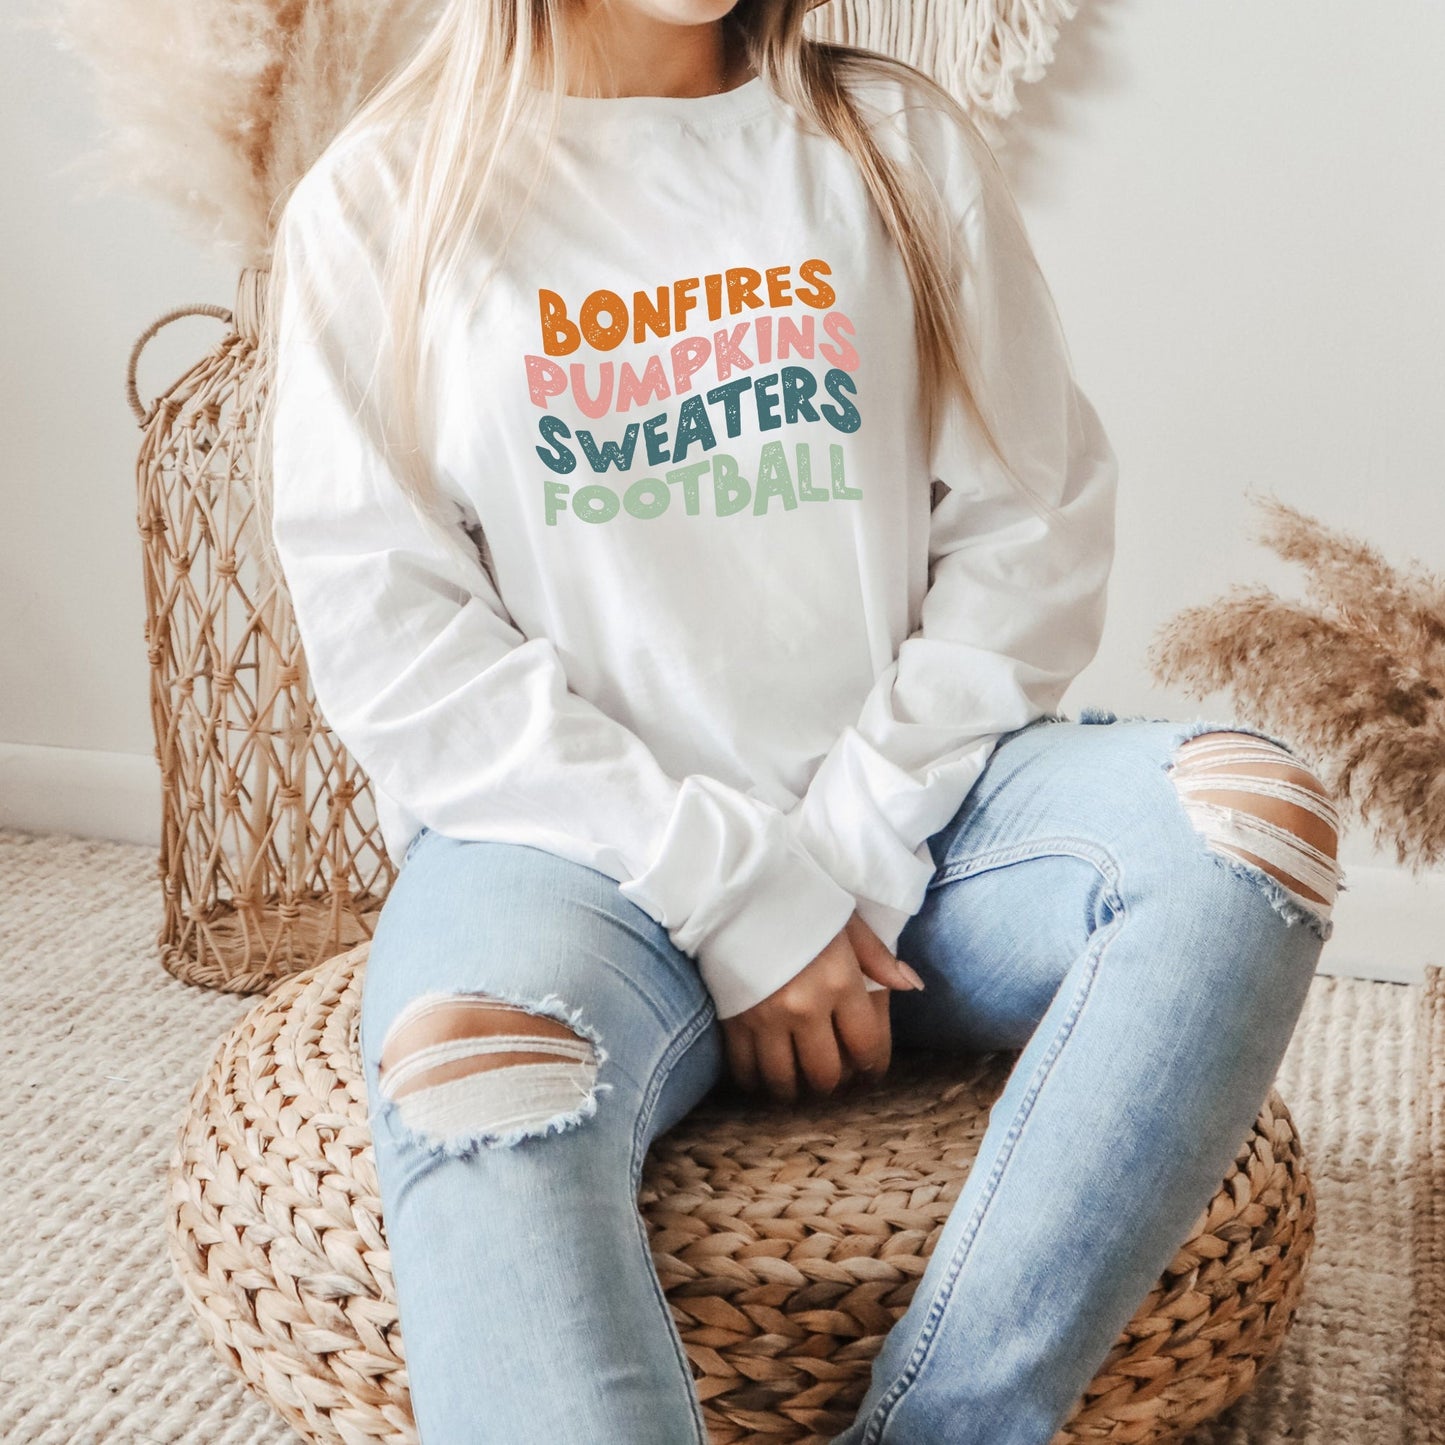 Bonfires Pumpkins Sweaters Football | Long Sleeve Crew Neck